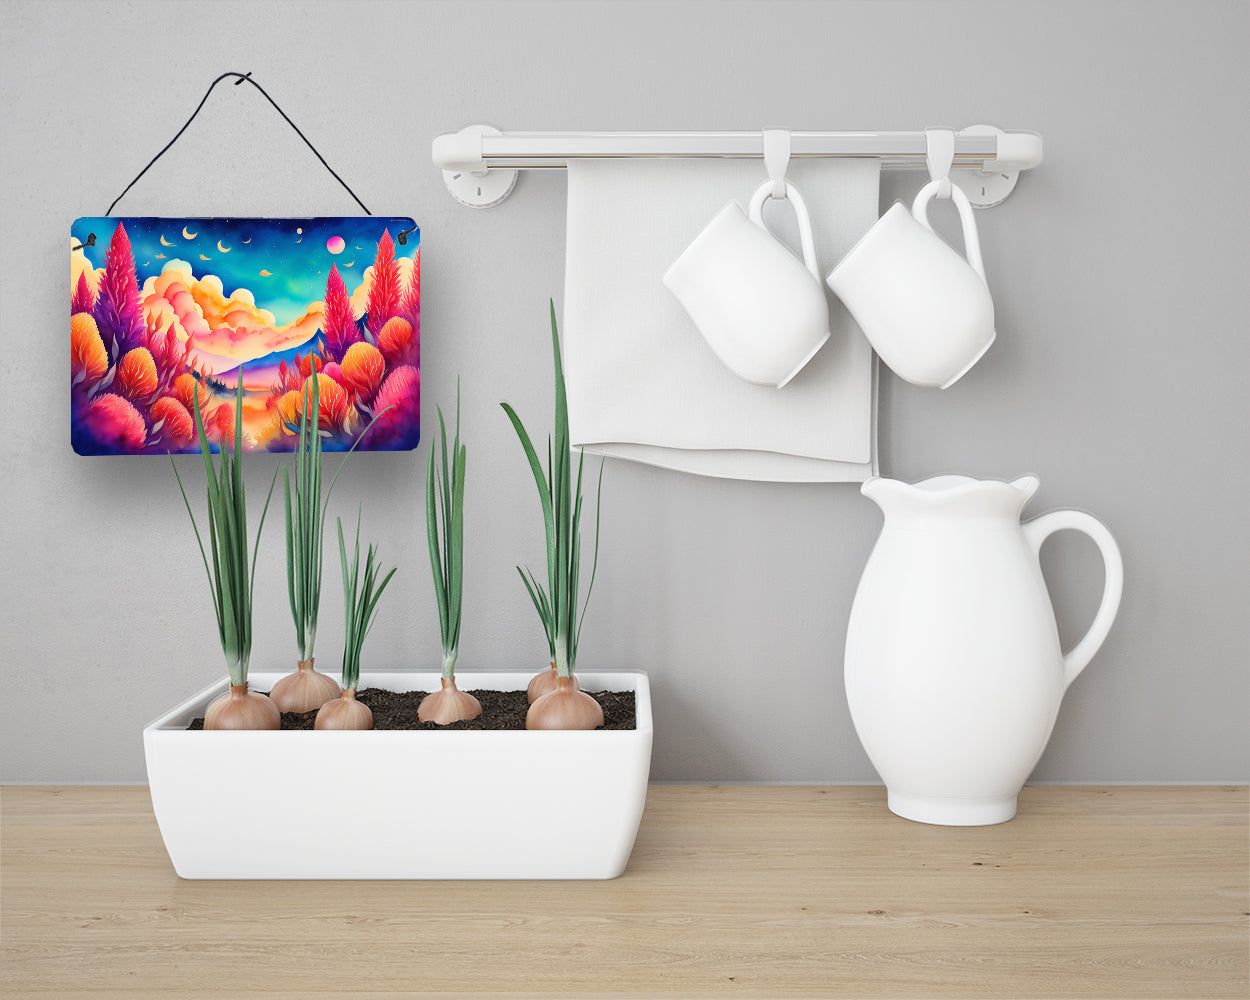 Celosia in Color Wall or Door Hanging Prints